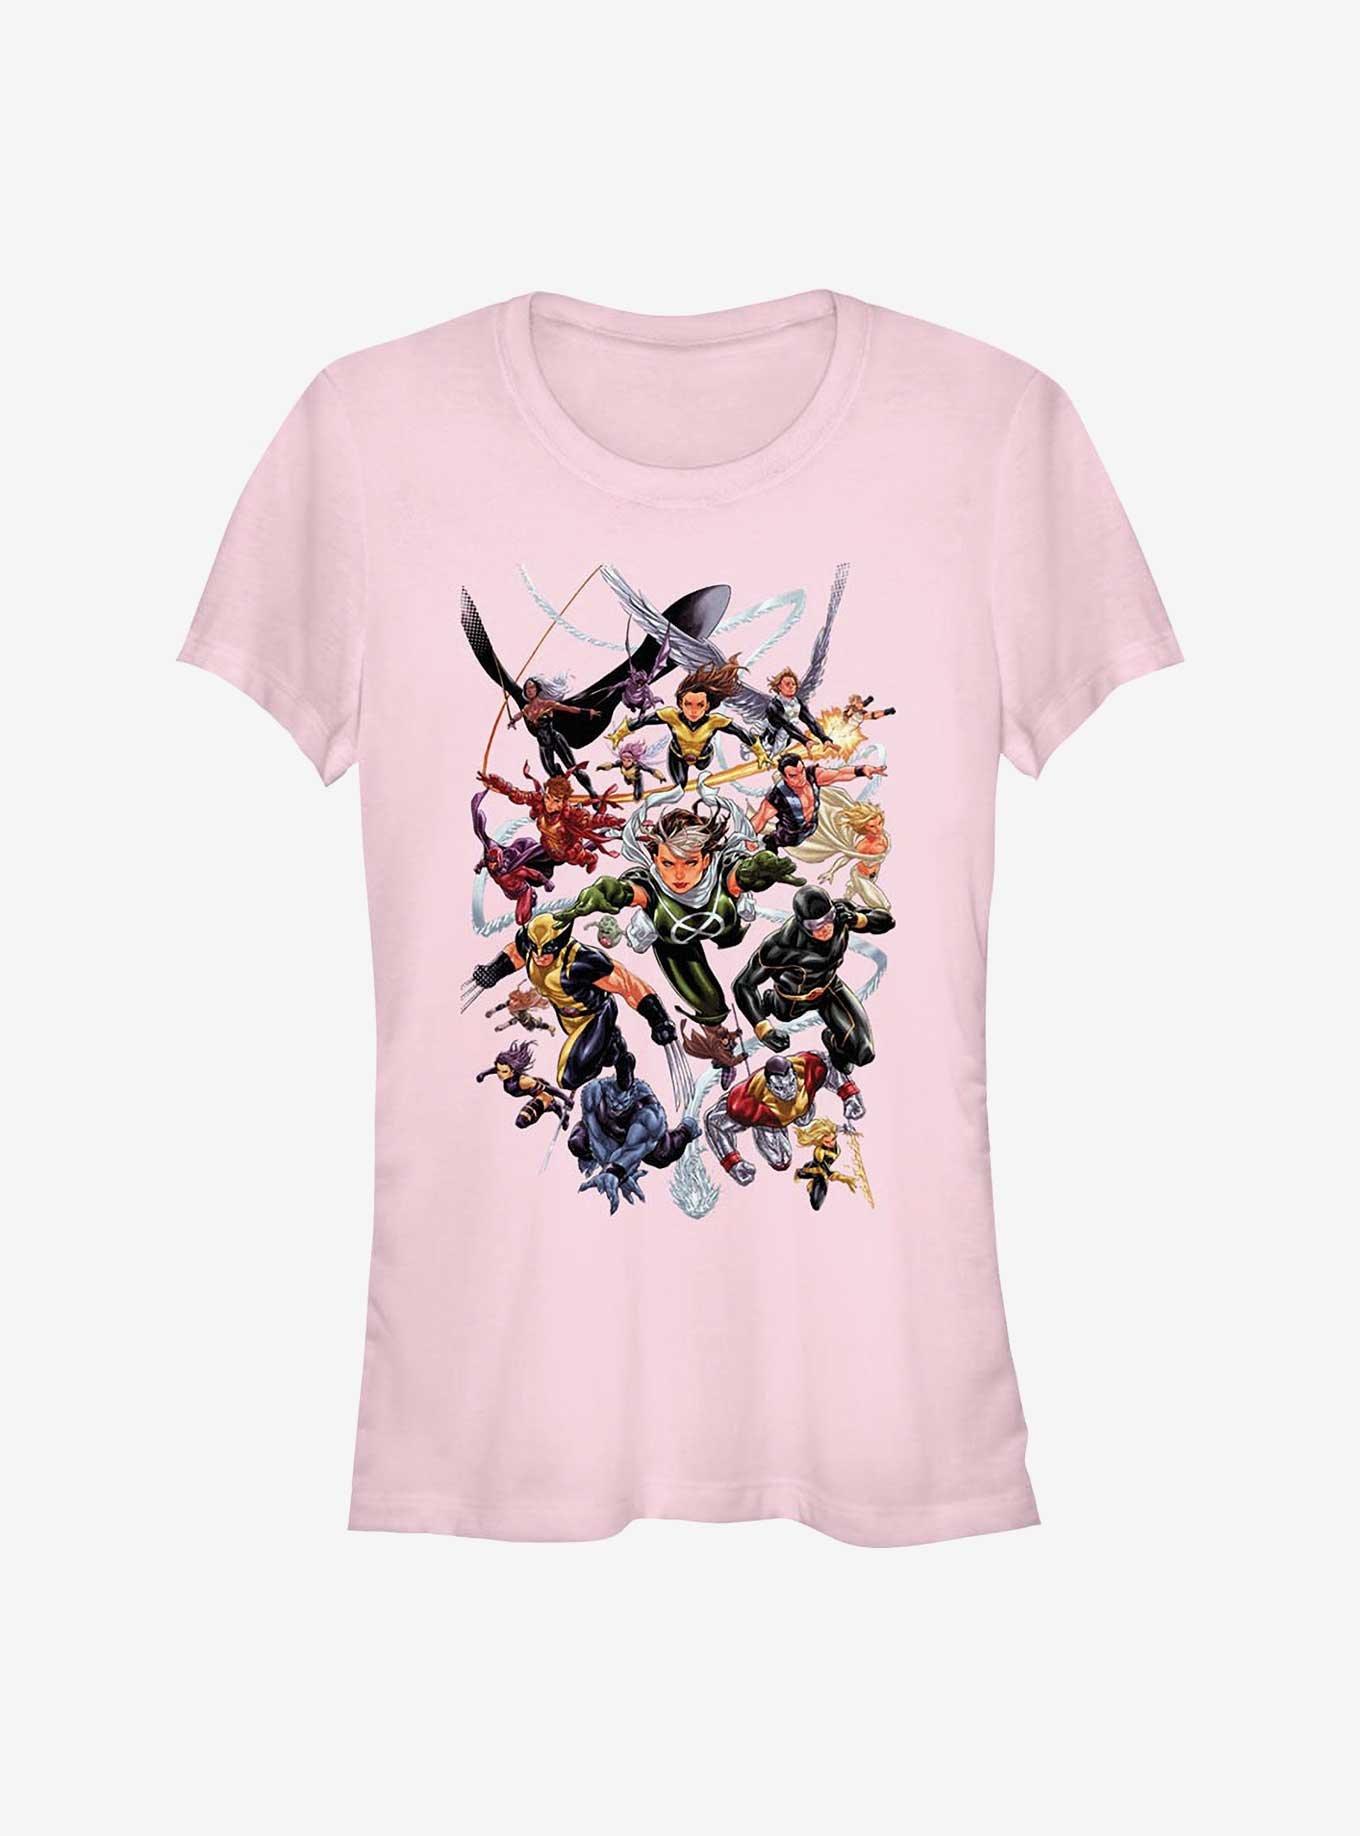 X-Men Flying Foward Girls T-Shirt, LIGHT PINK, hi-res